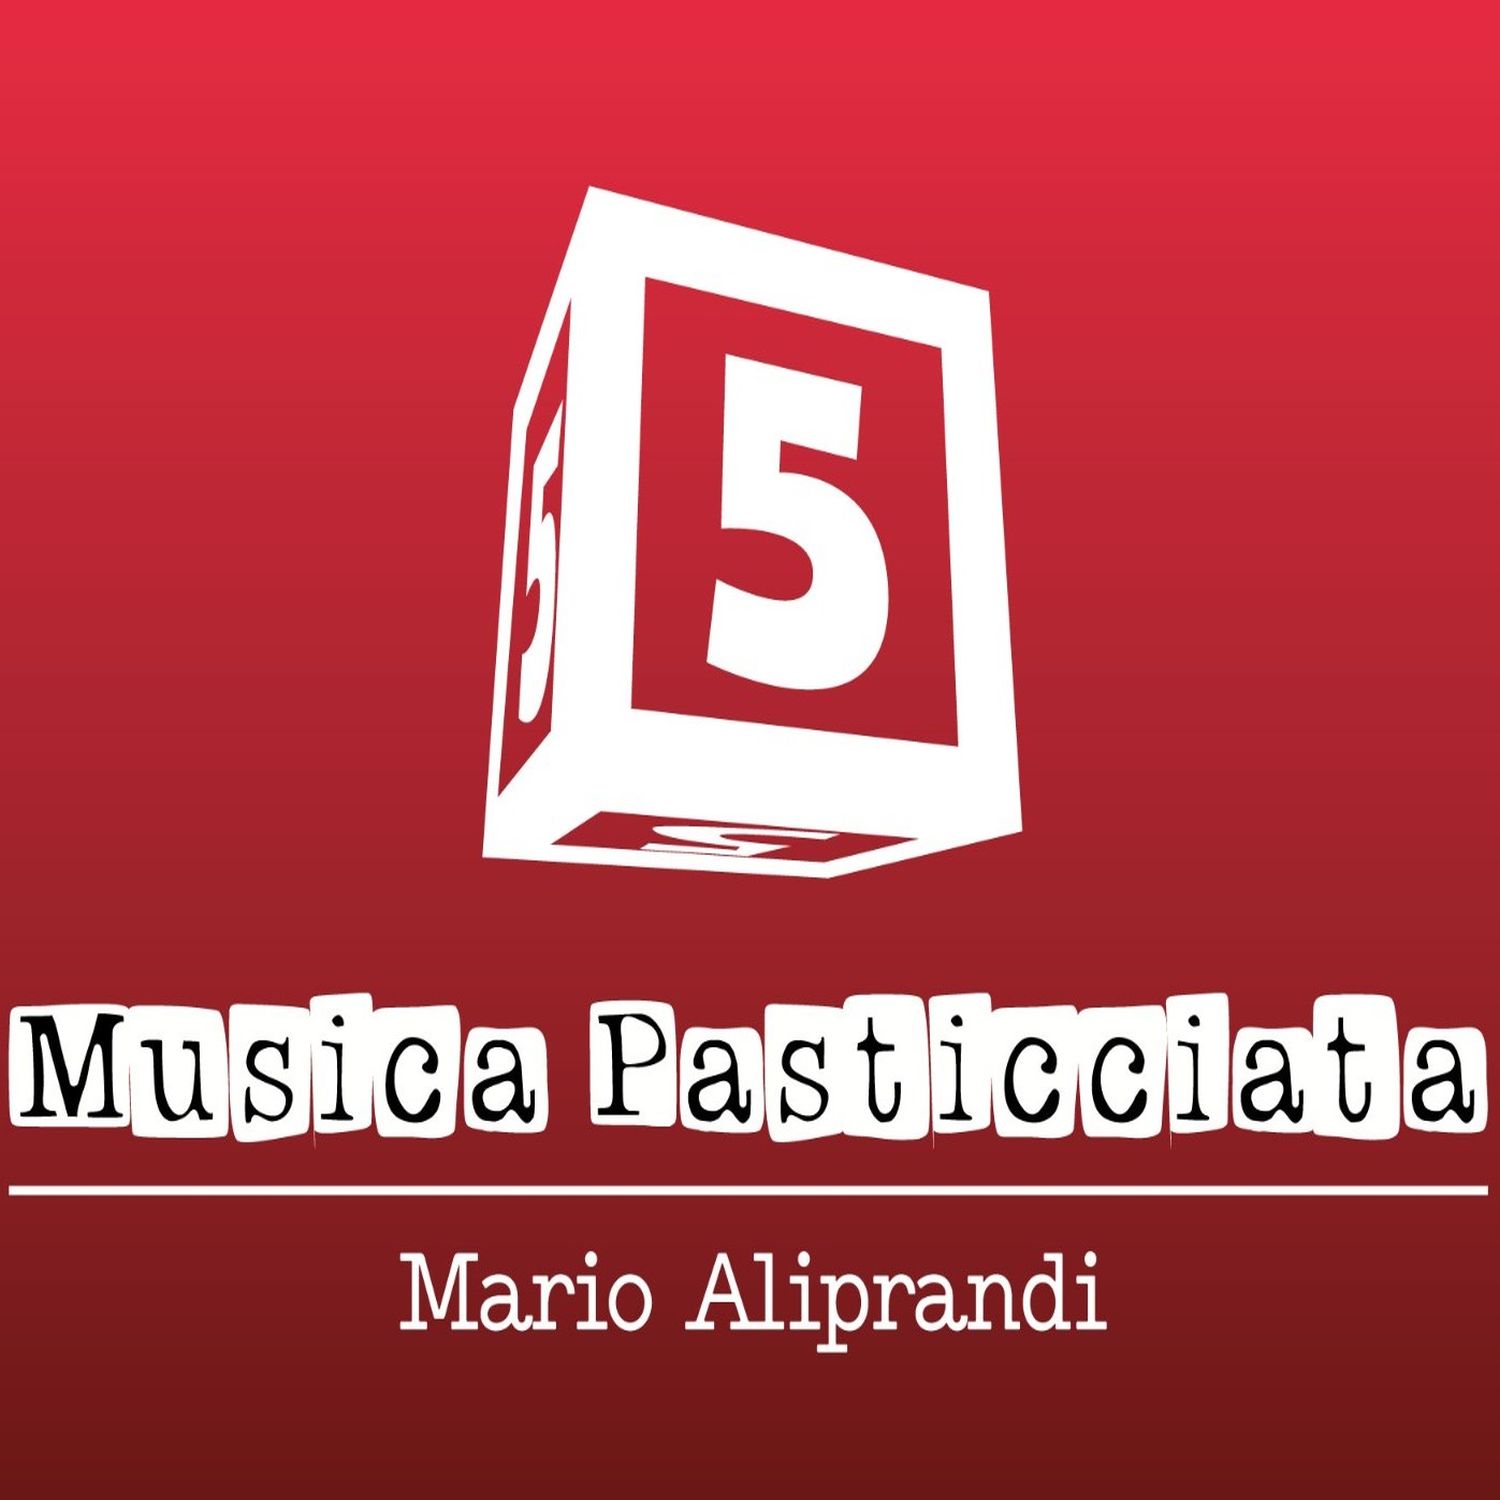 MARIO ALIPRANDI - MUSICA PASTICCIATA - PODCAST - ADMR ROCK WEB RADIO.jpg